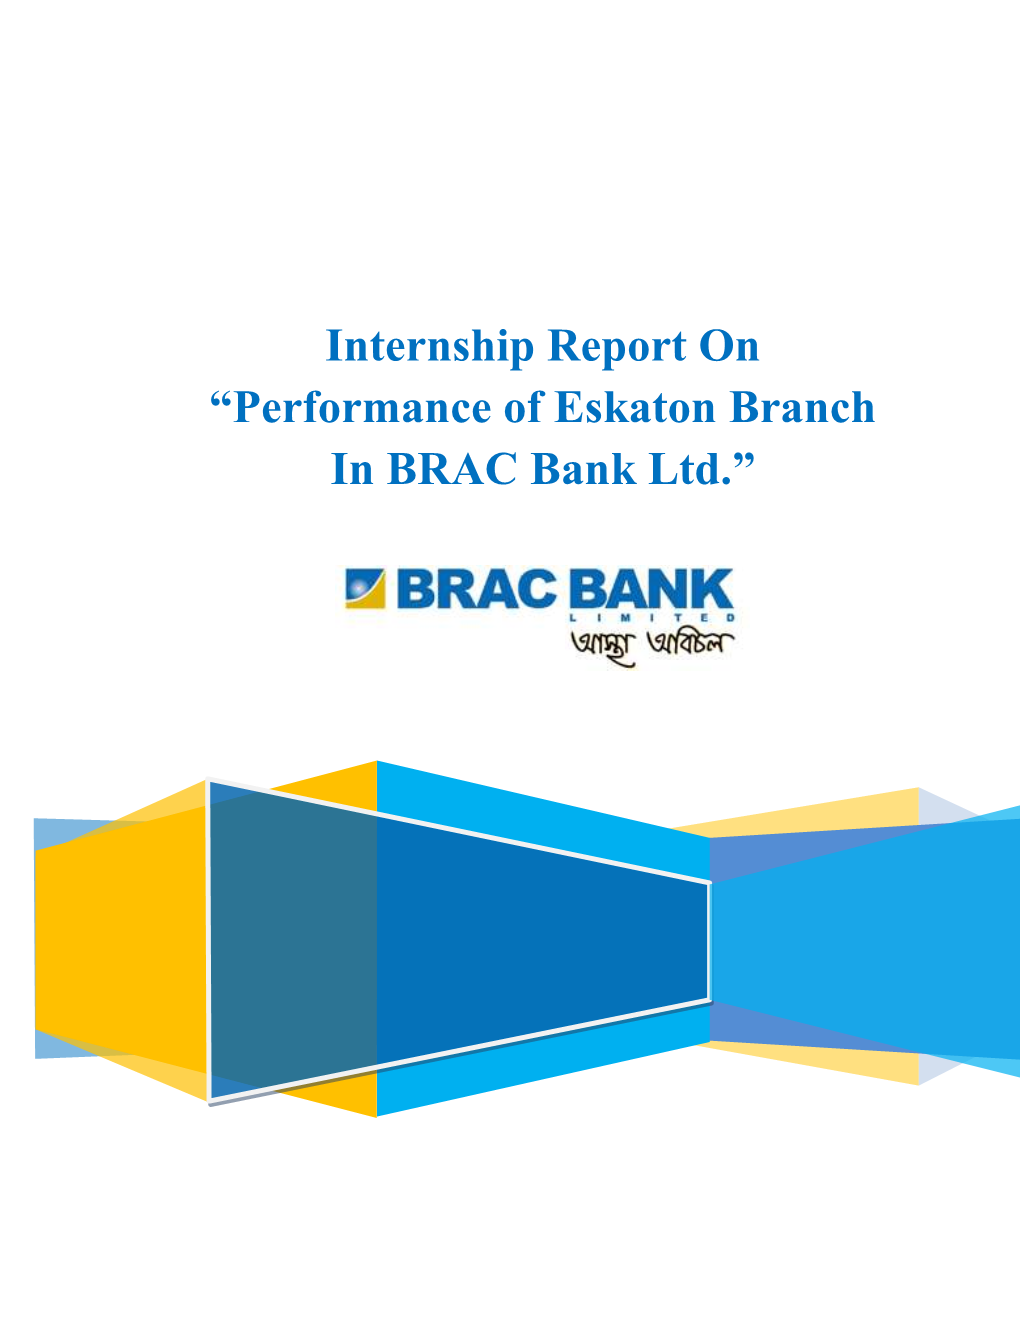 “Performance of Eskaton Branch in BRAC Bank Ltd.”